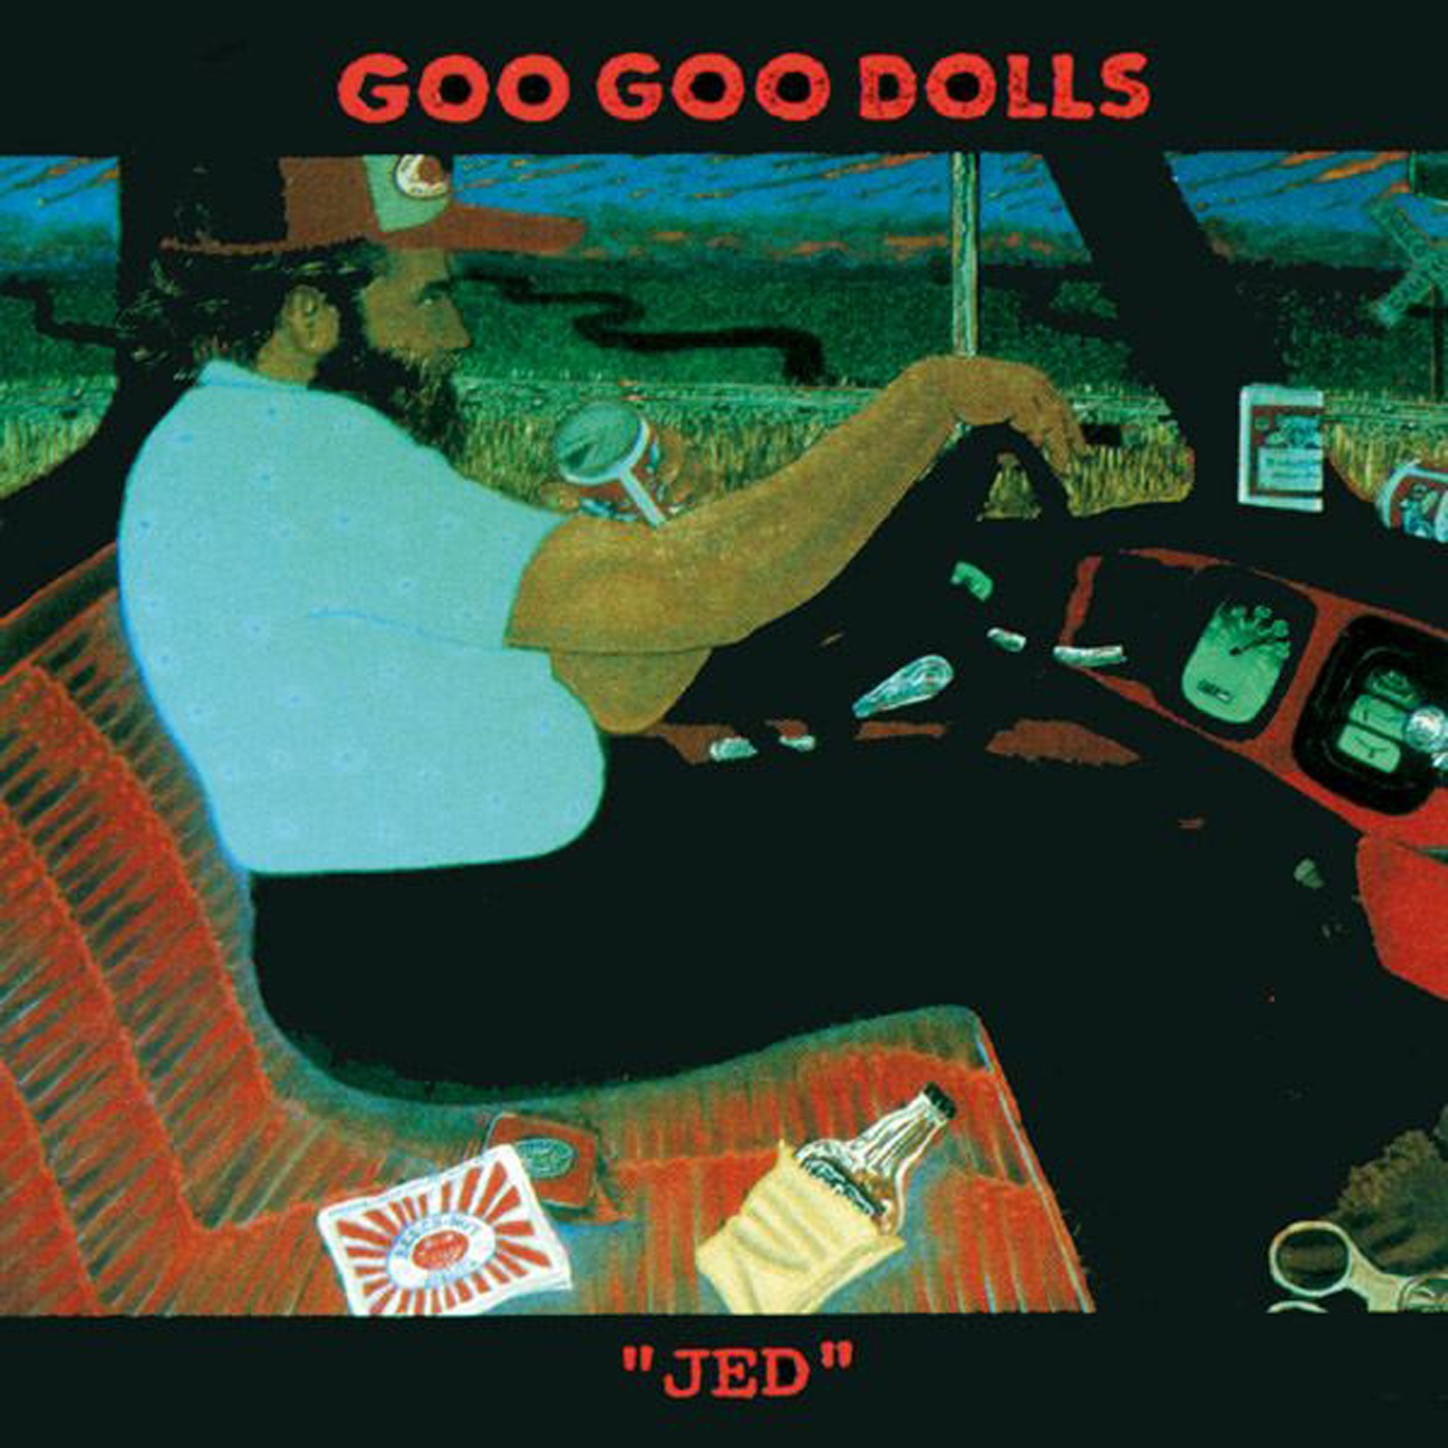 The Goo Goo Dolls - Jed LP